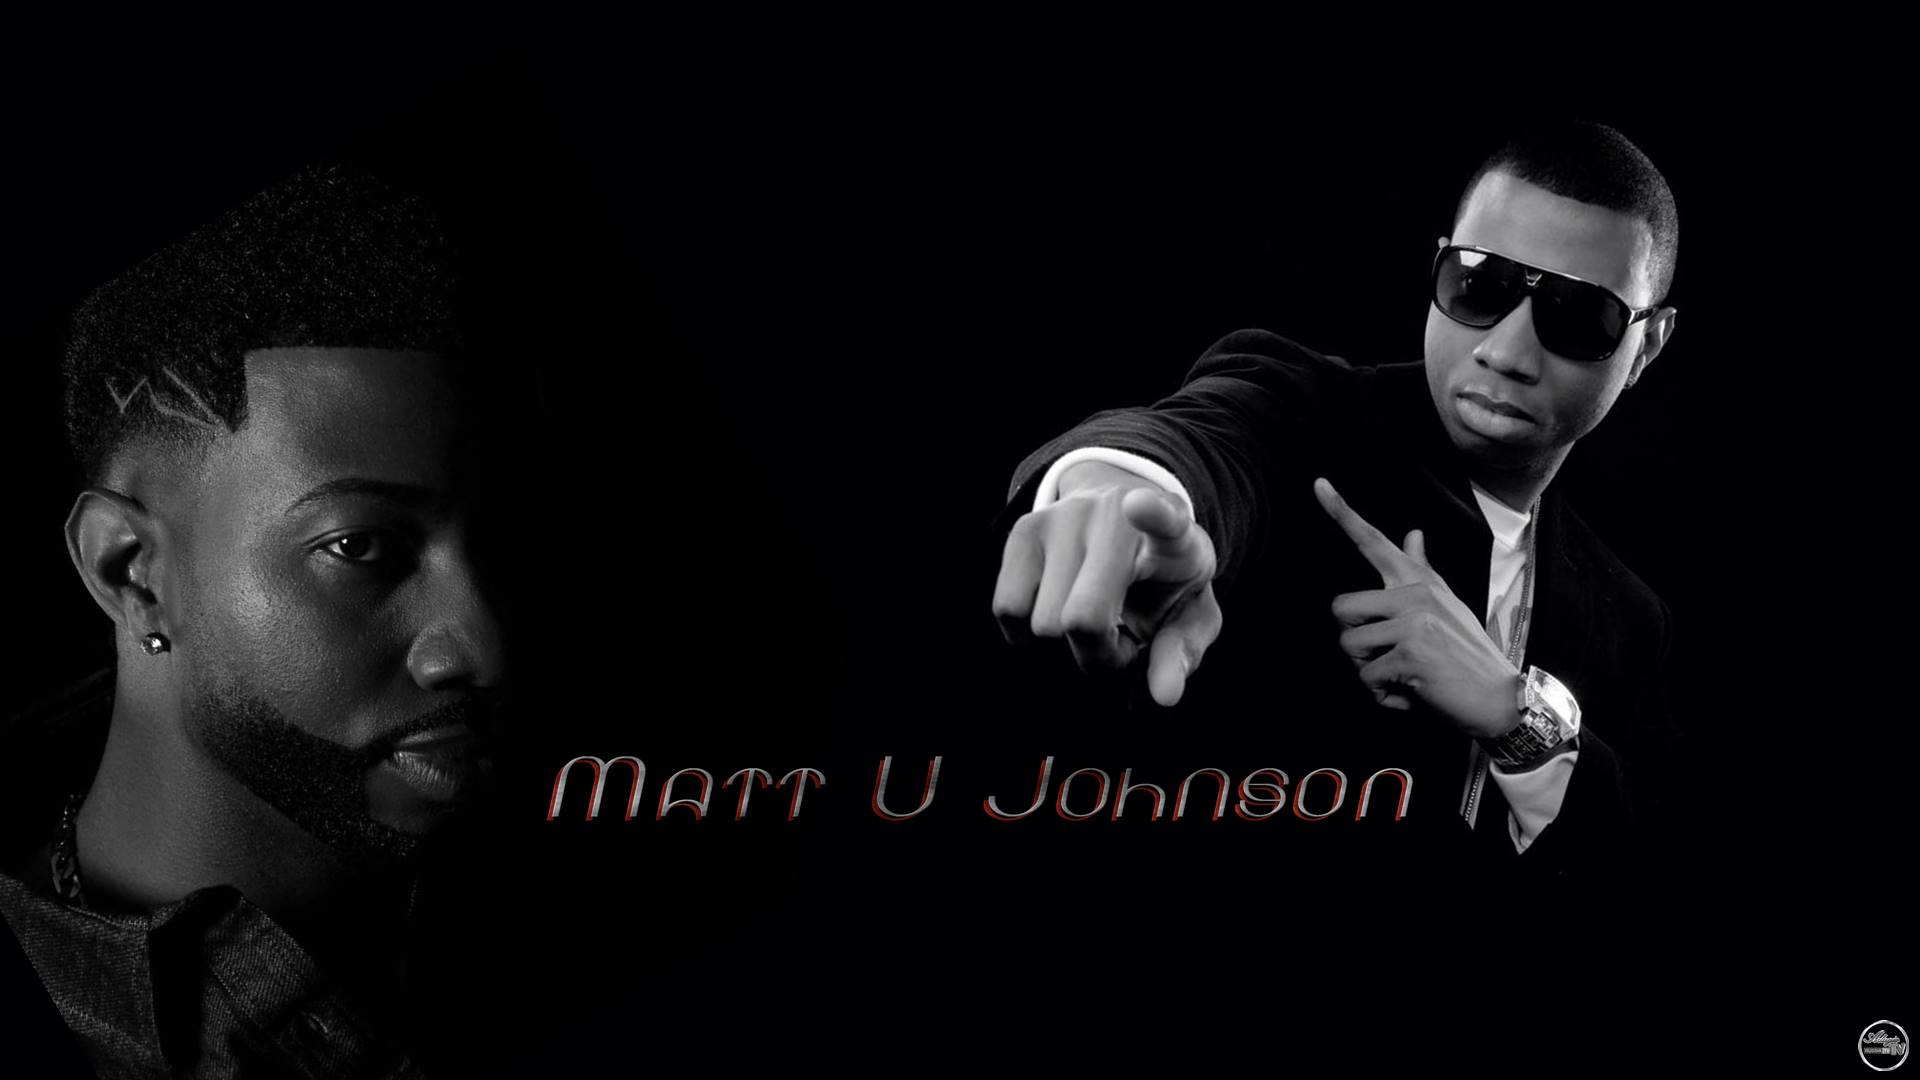 Matt U Johnson